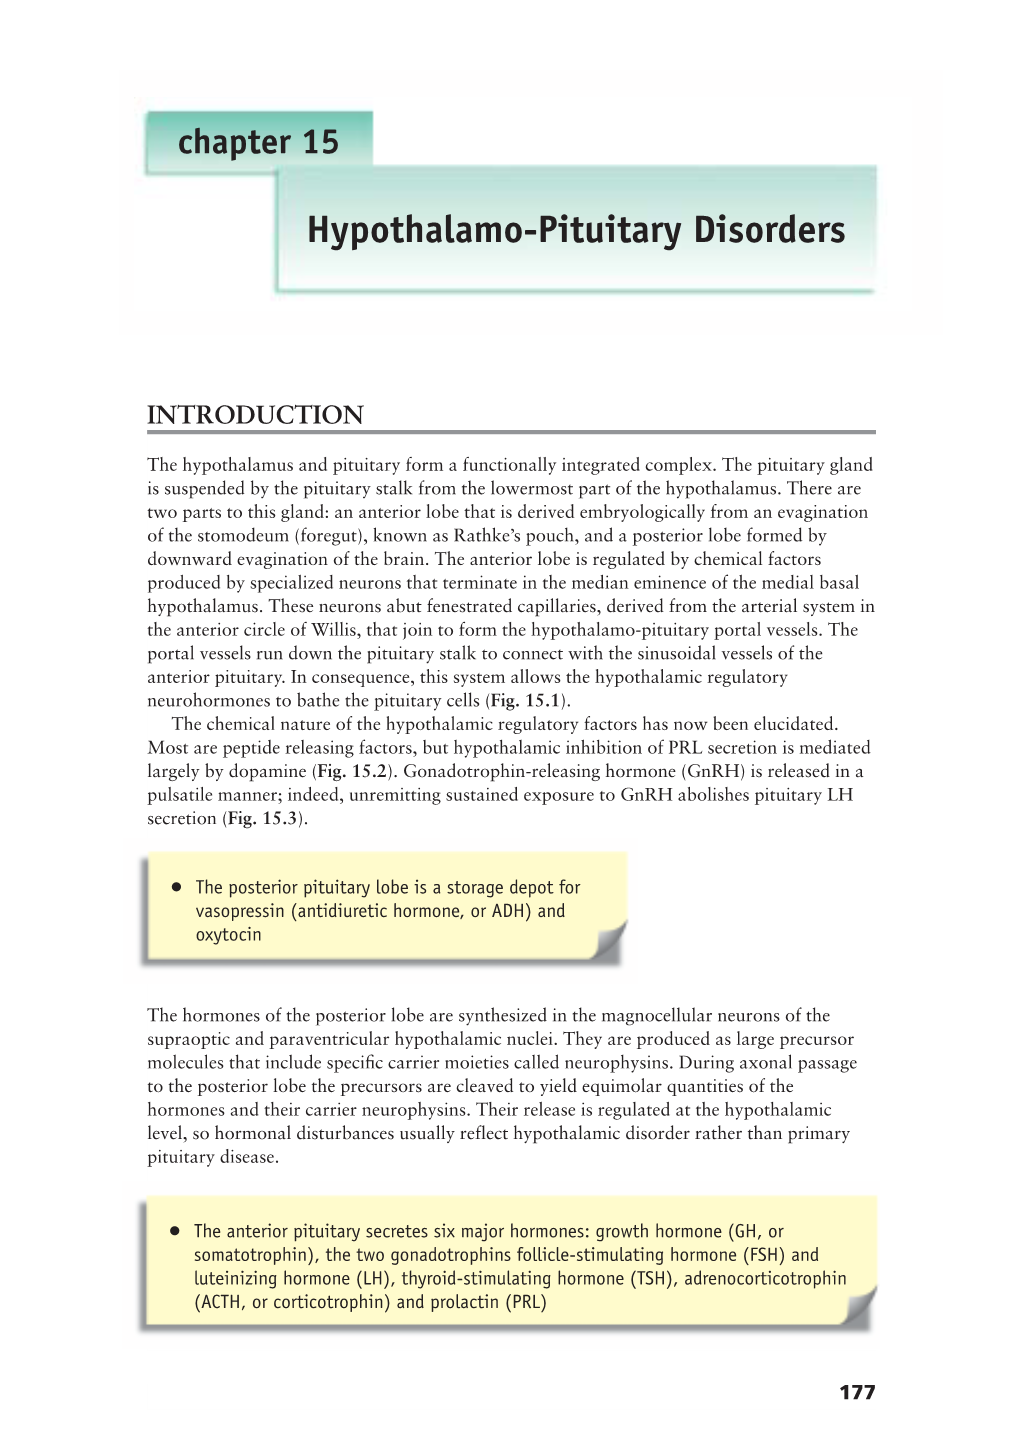 Hypothalamo-Pituitary Disorders